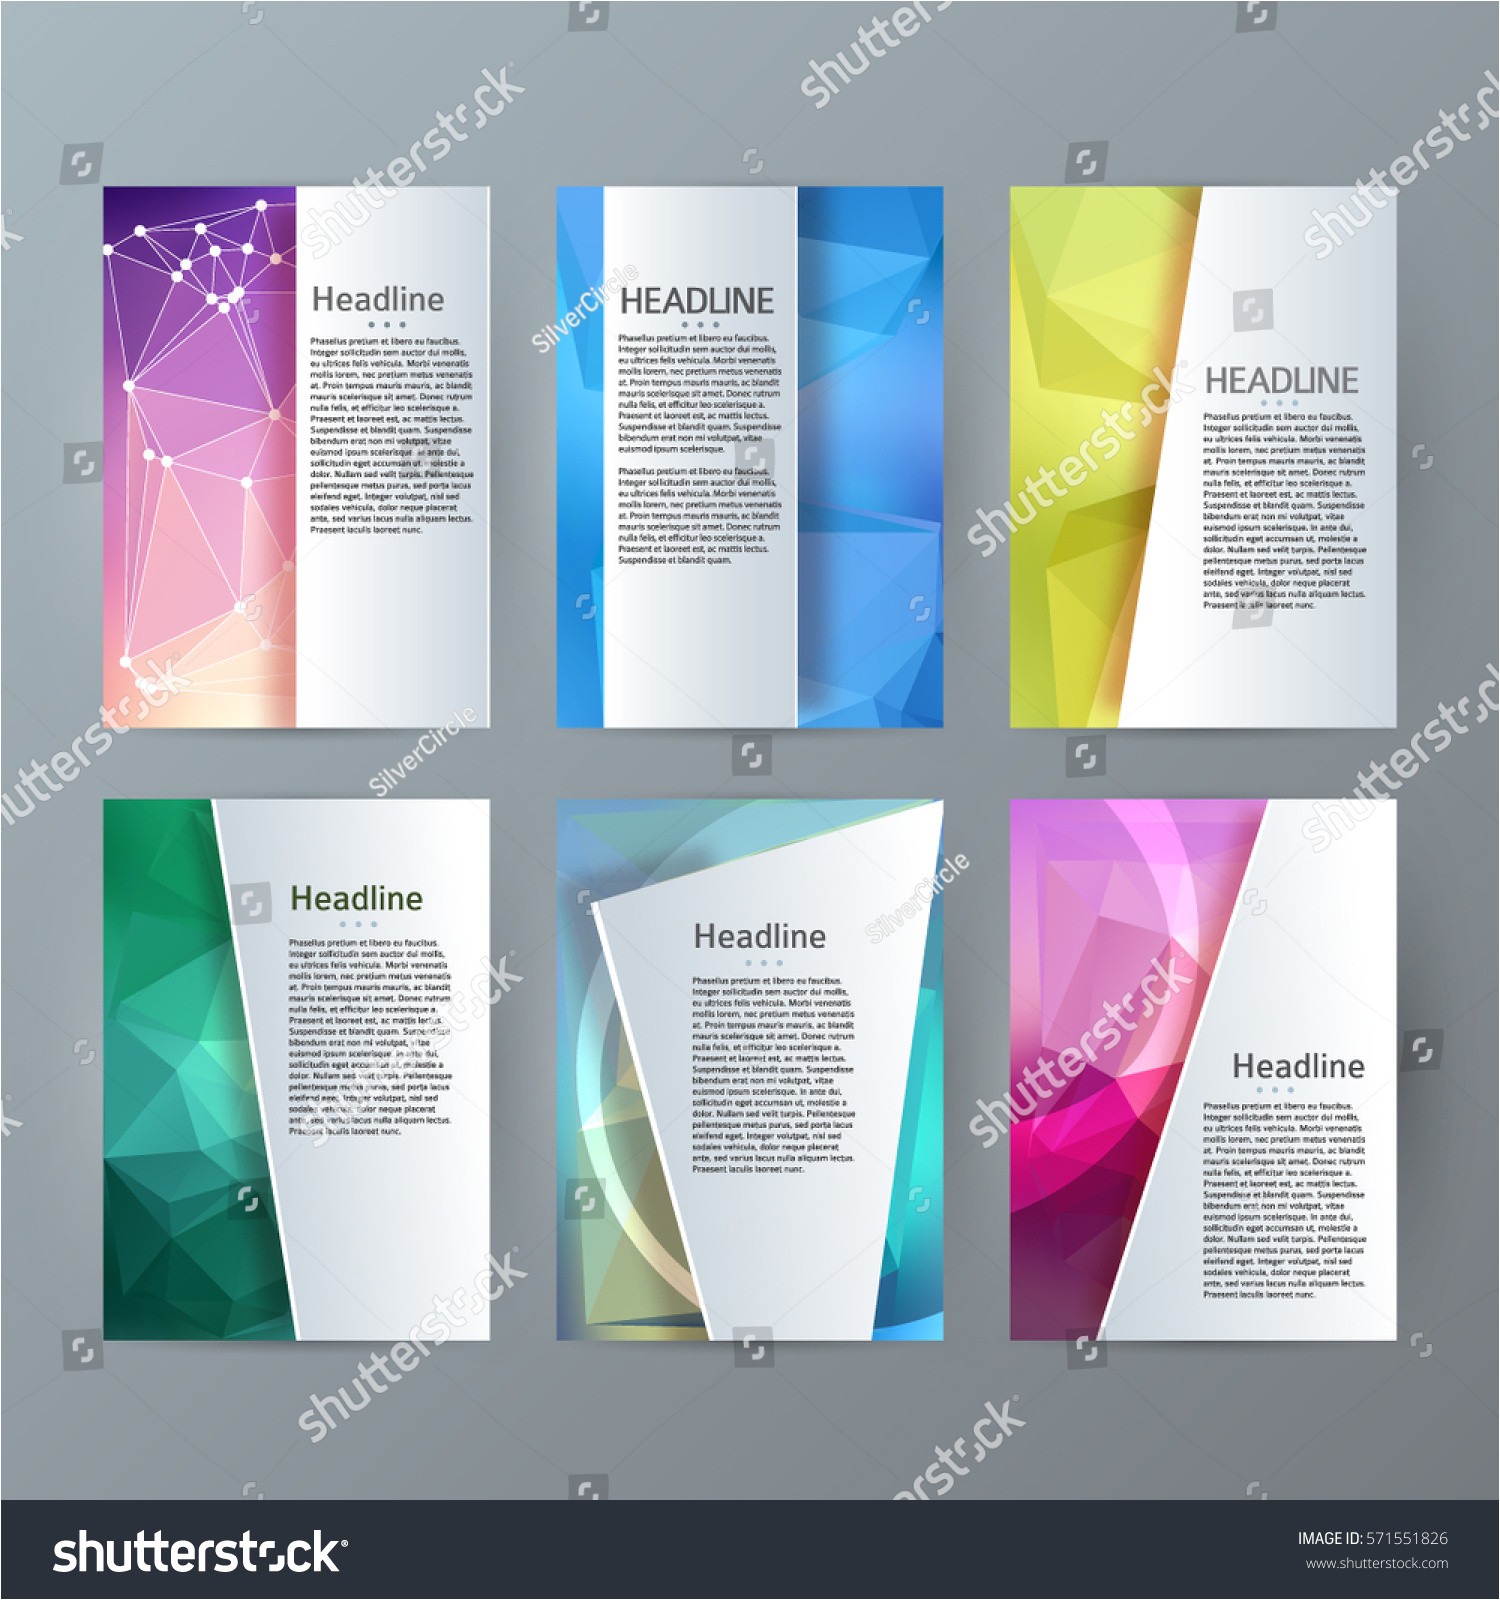 stock vector design elements presentation template set vertical banners colors background backdrop glow light 571551826 jpg